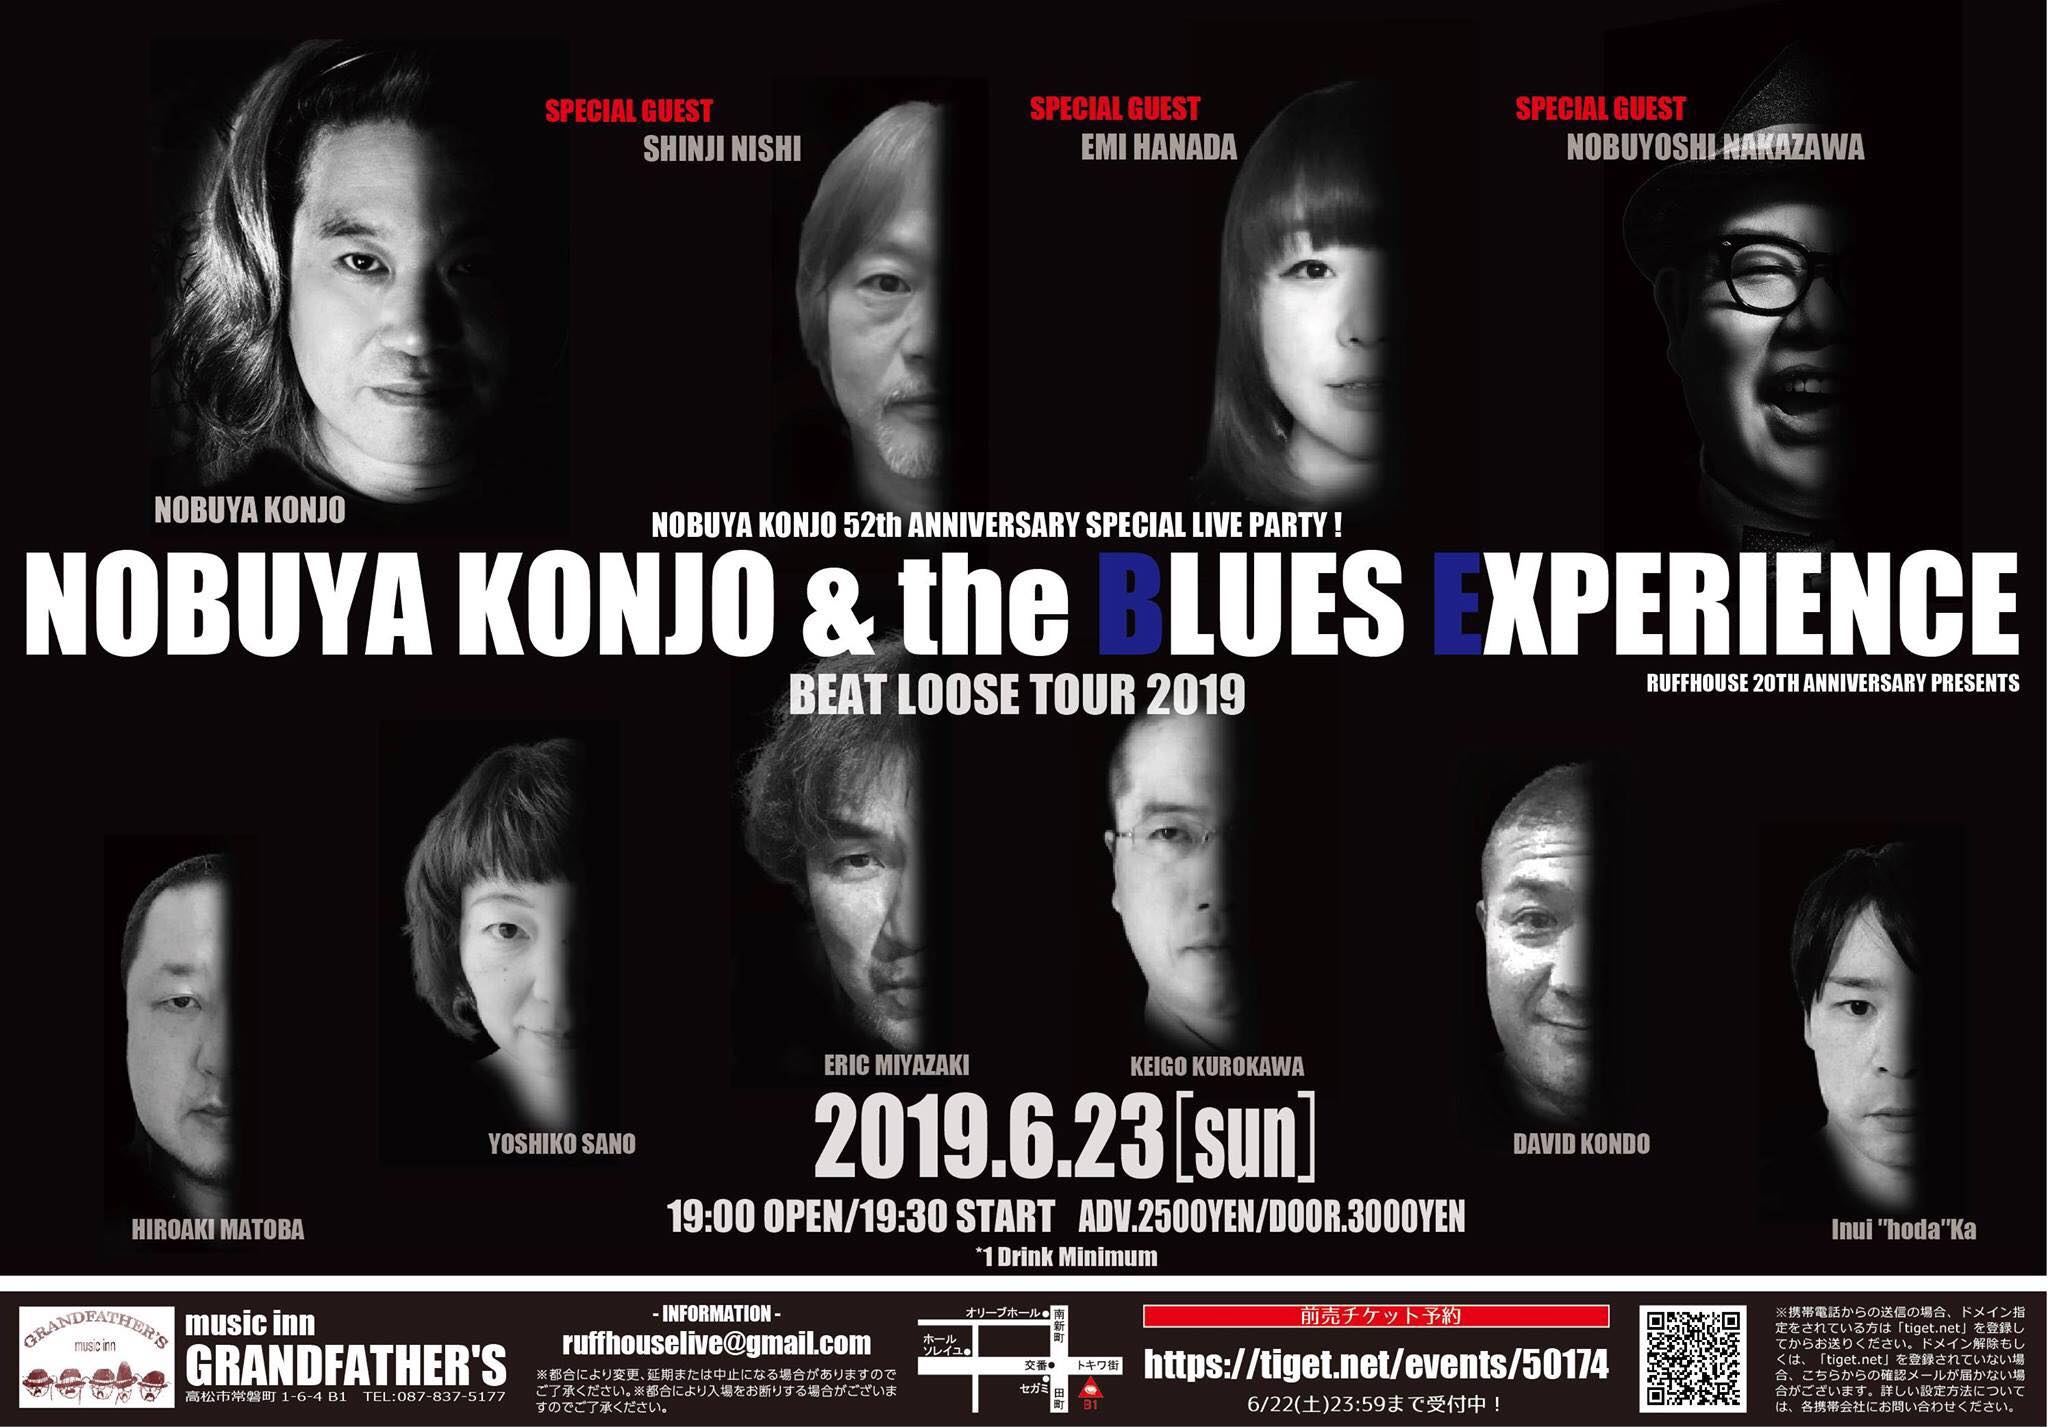 NOBUYA KONJO 52th ANNIVERSARY SPECIAL LIVE PARTY! NOBUYA KONJO & the BLUES EXPERIENCE BEAT LOOSE TOUR 2019